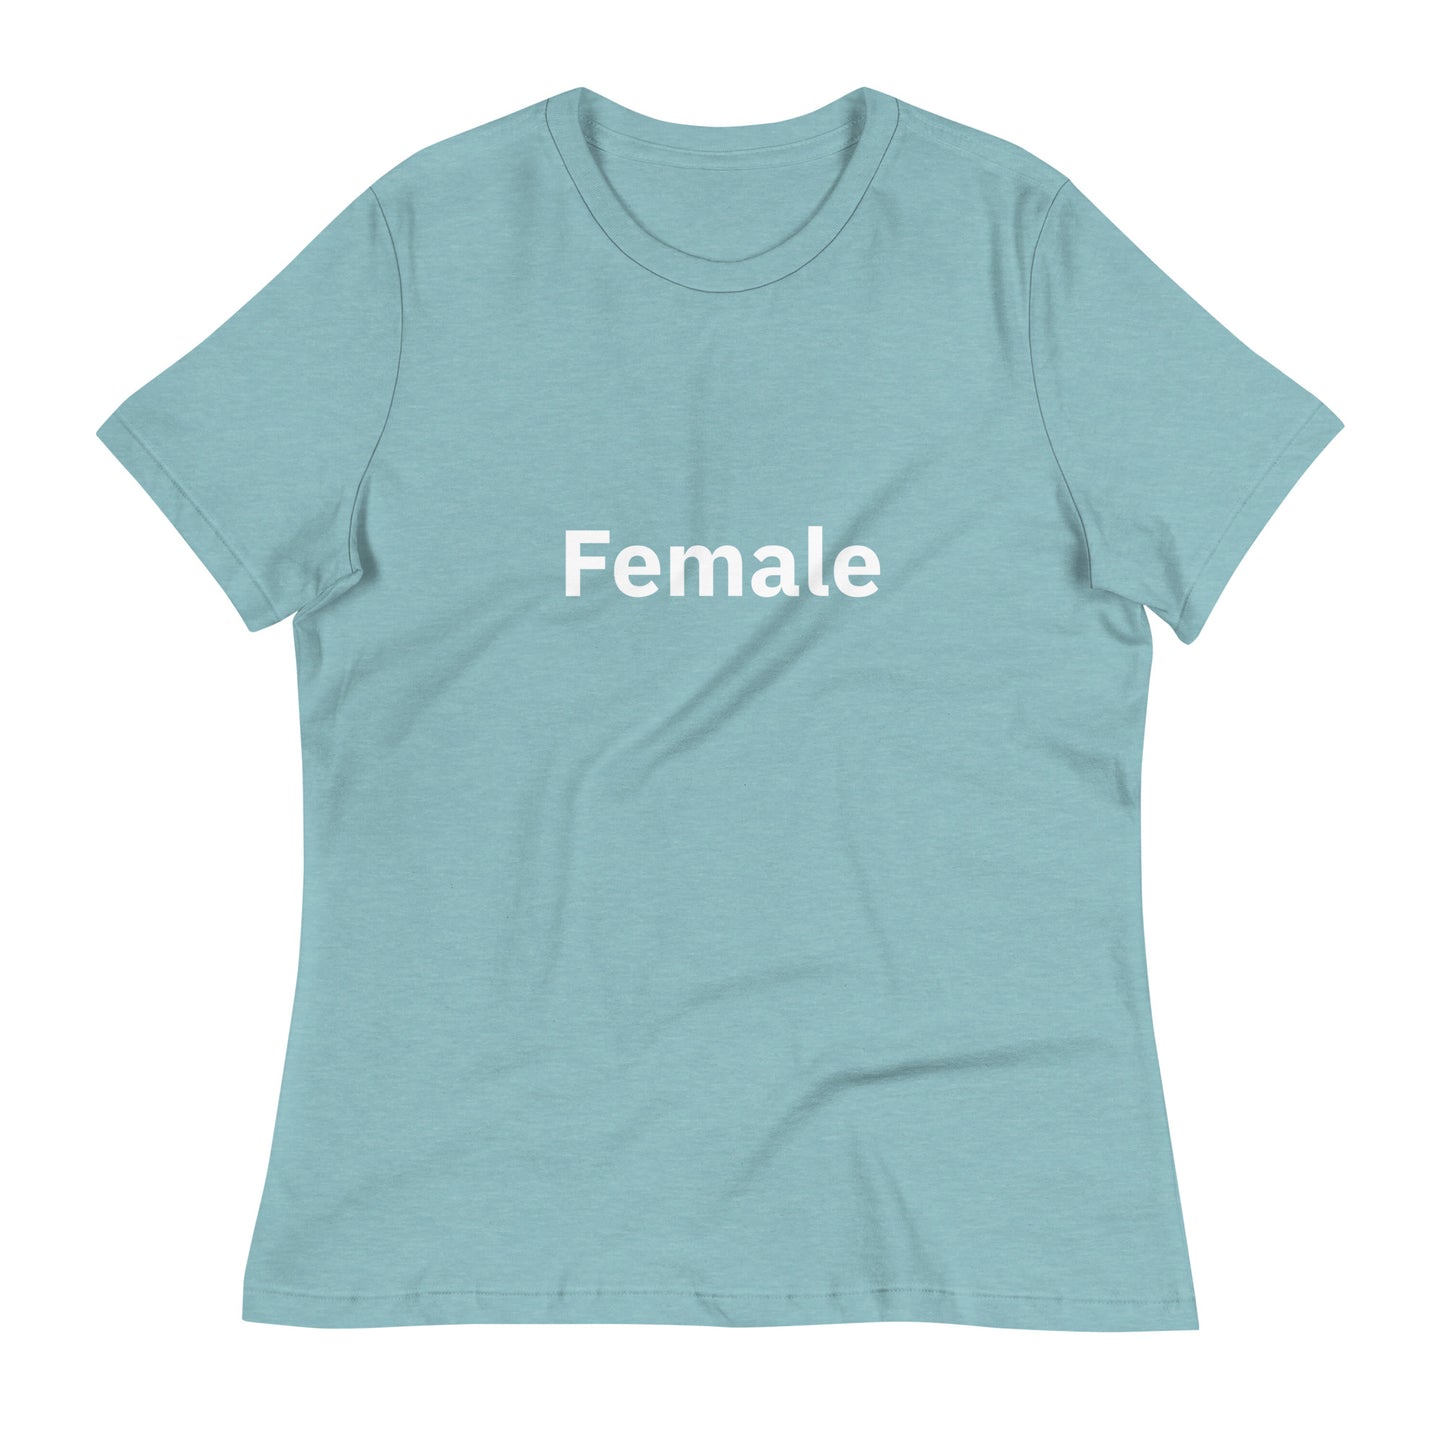 Female t-shirt